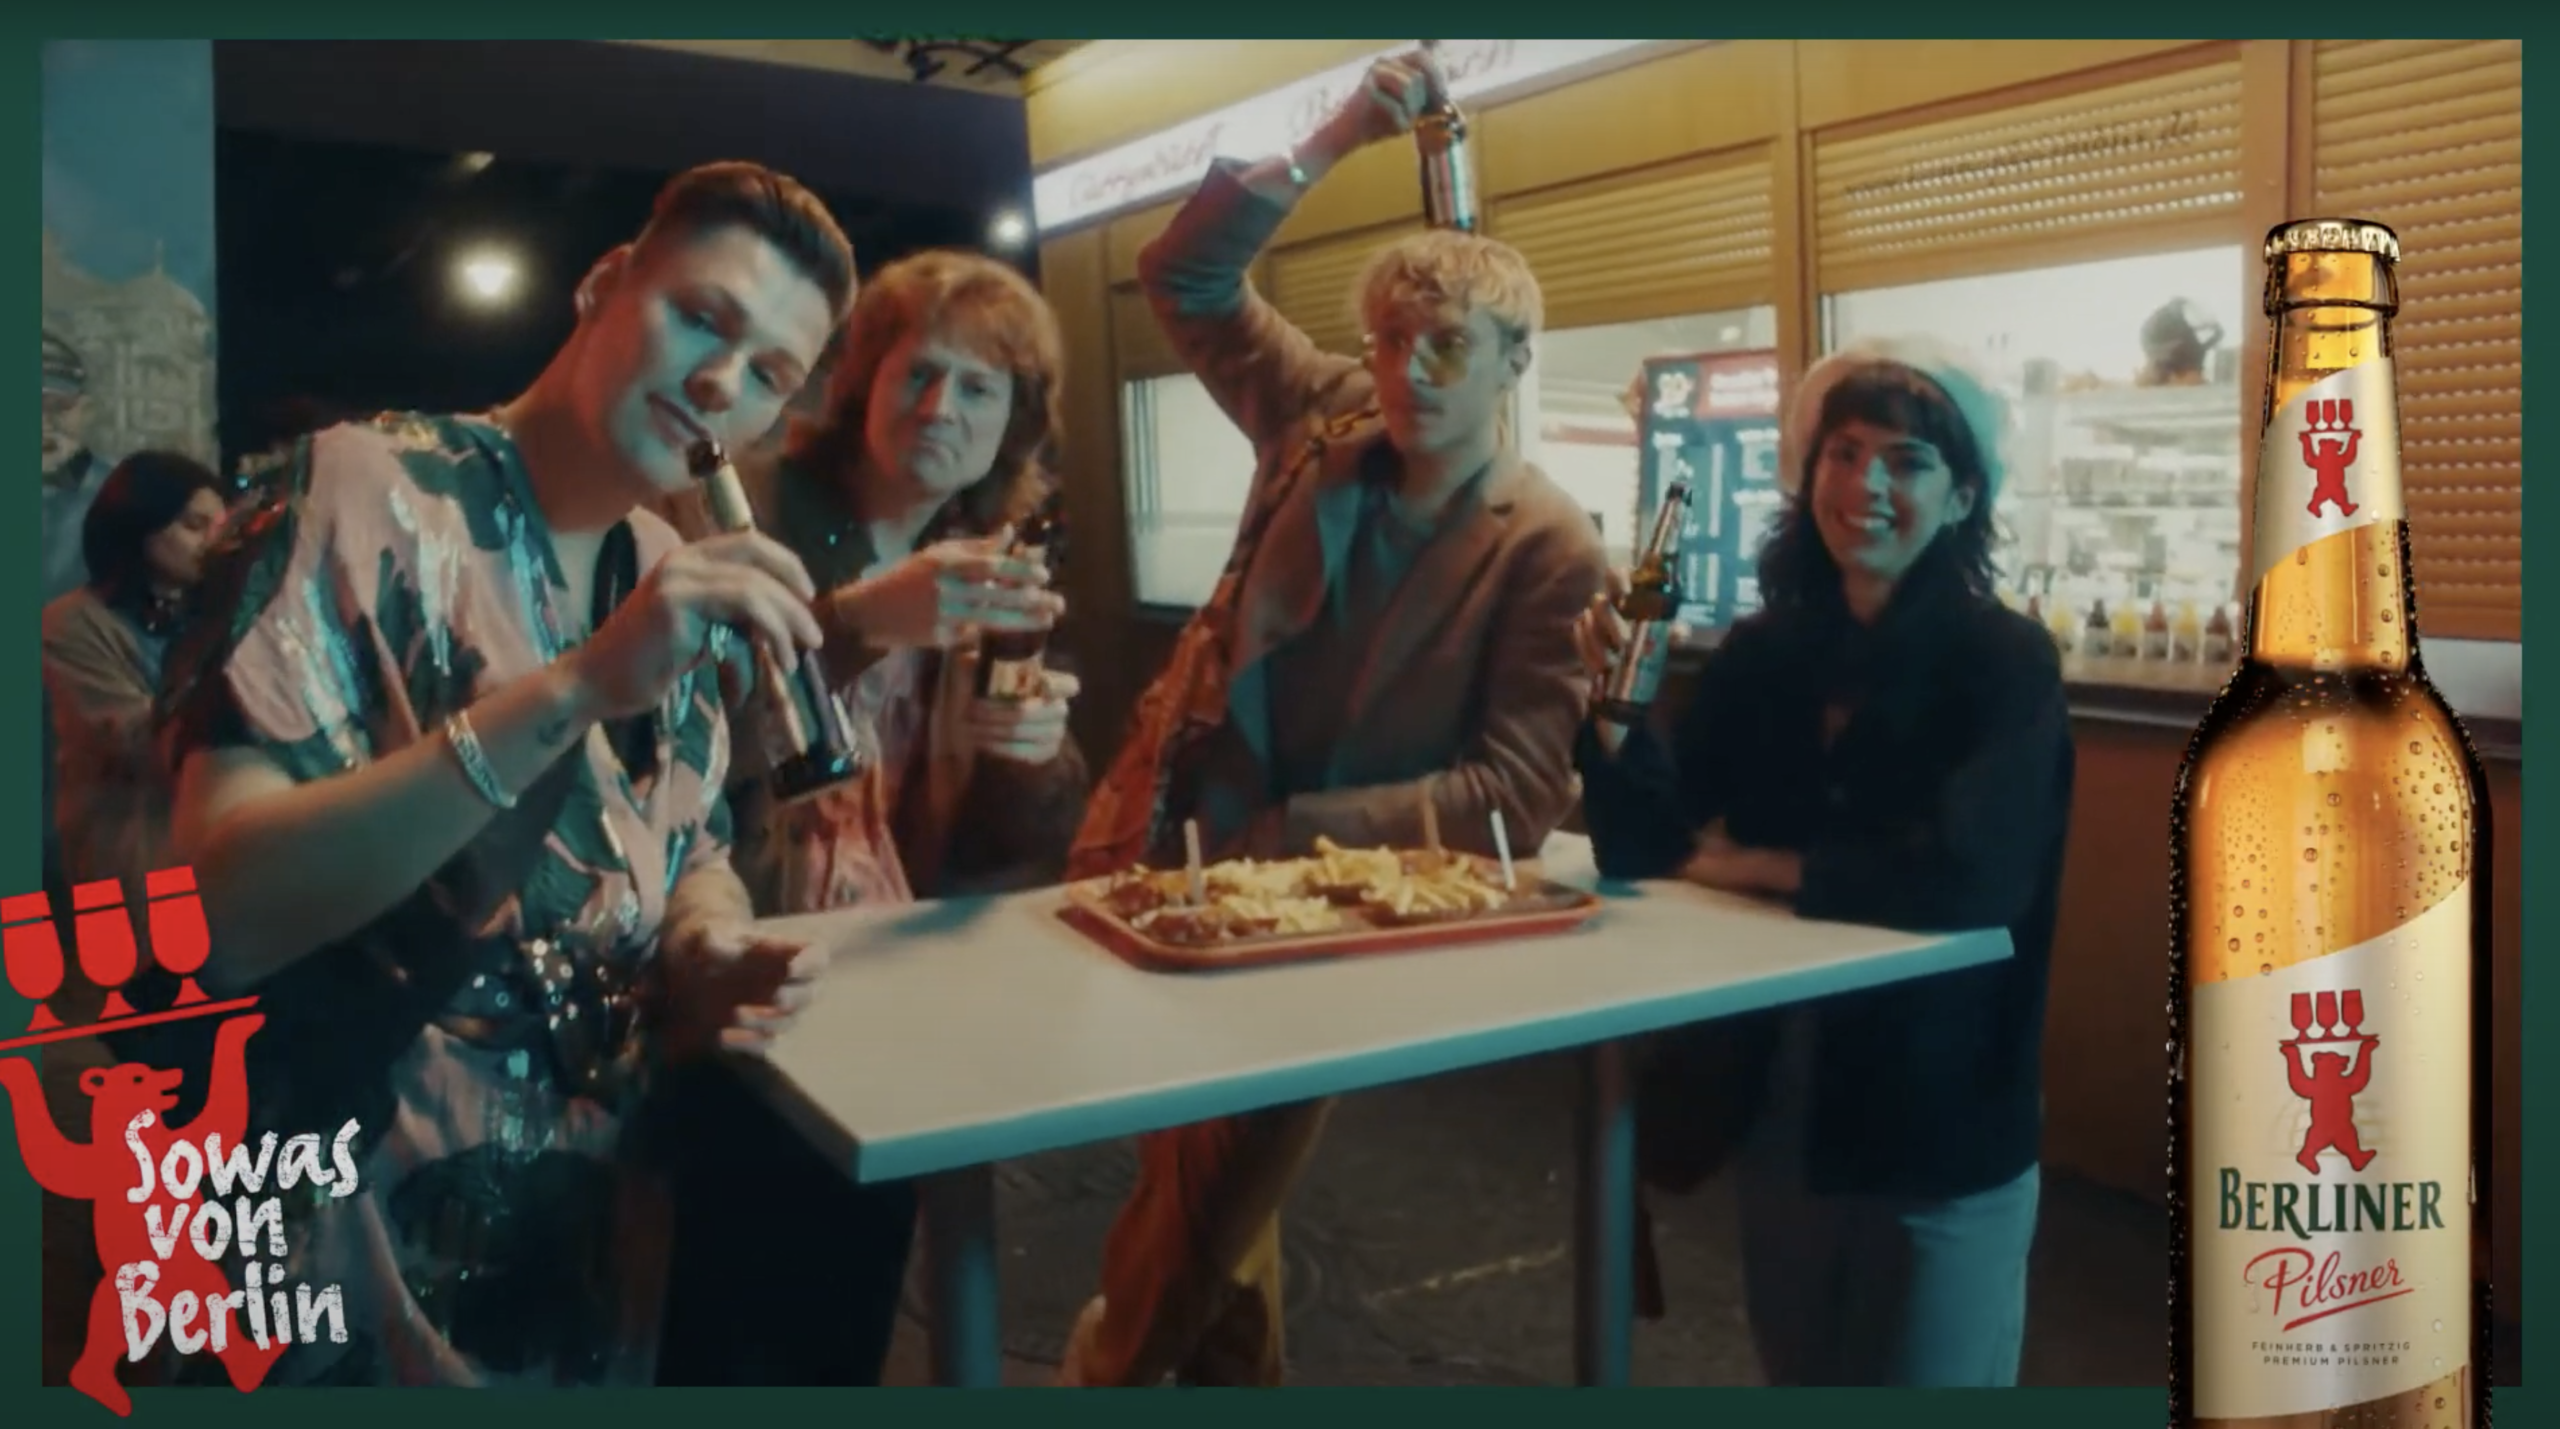 plush74 location scout tvc berlin berliner pilsener commercial film shoot bar currywurst 1